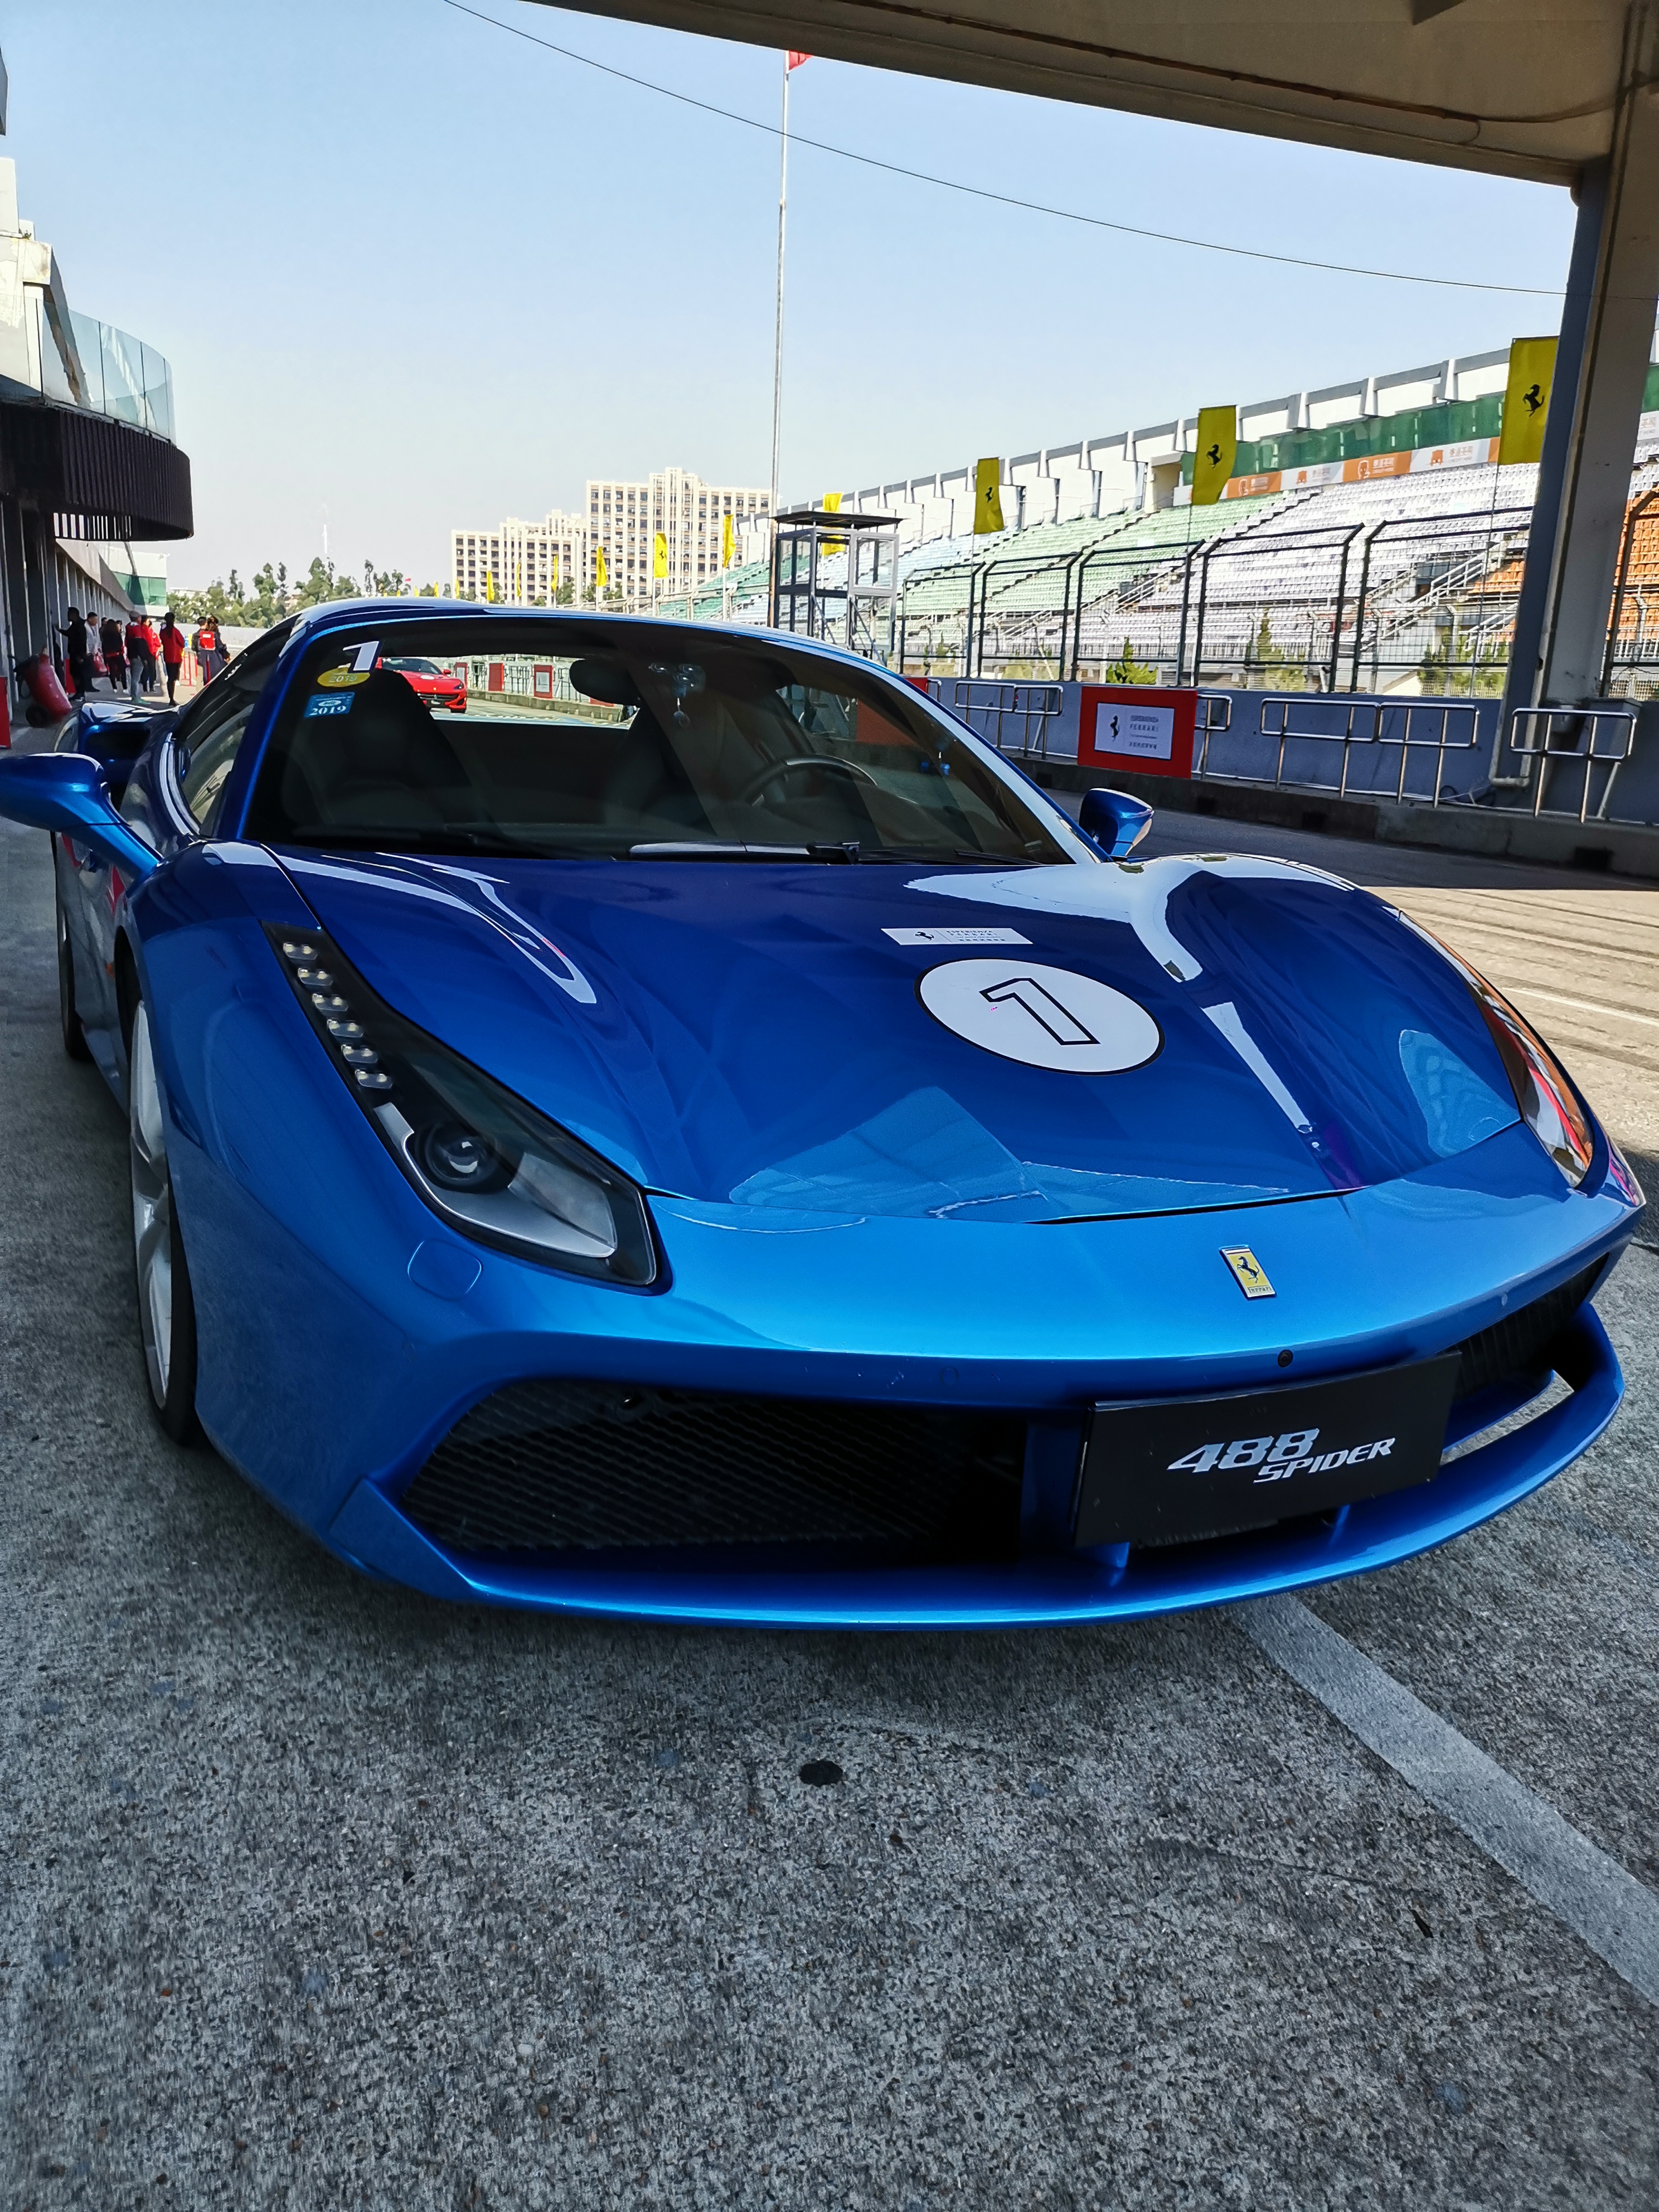 Driving four Ferraris in Zhuhai — Hashtag Legend